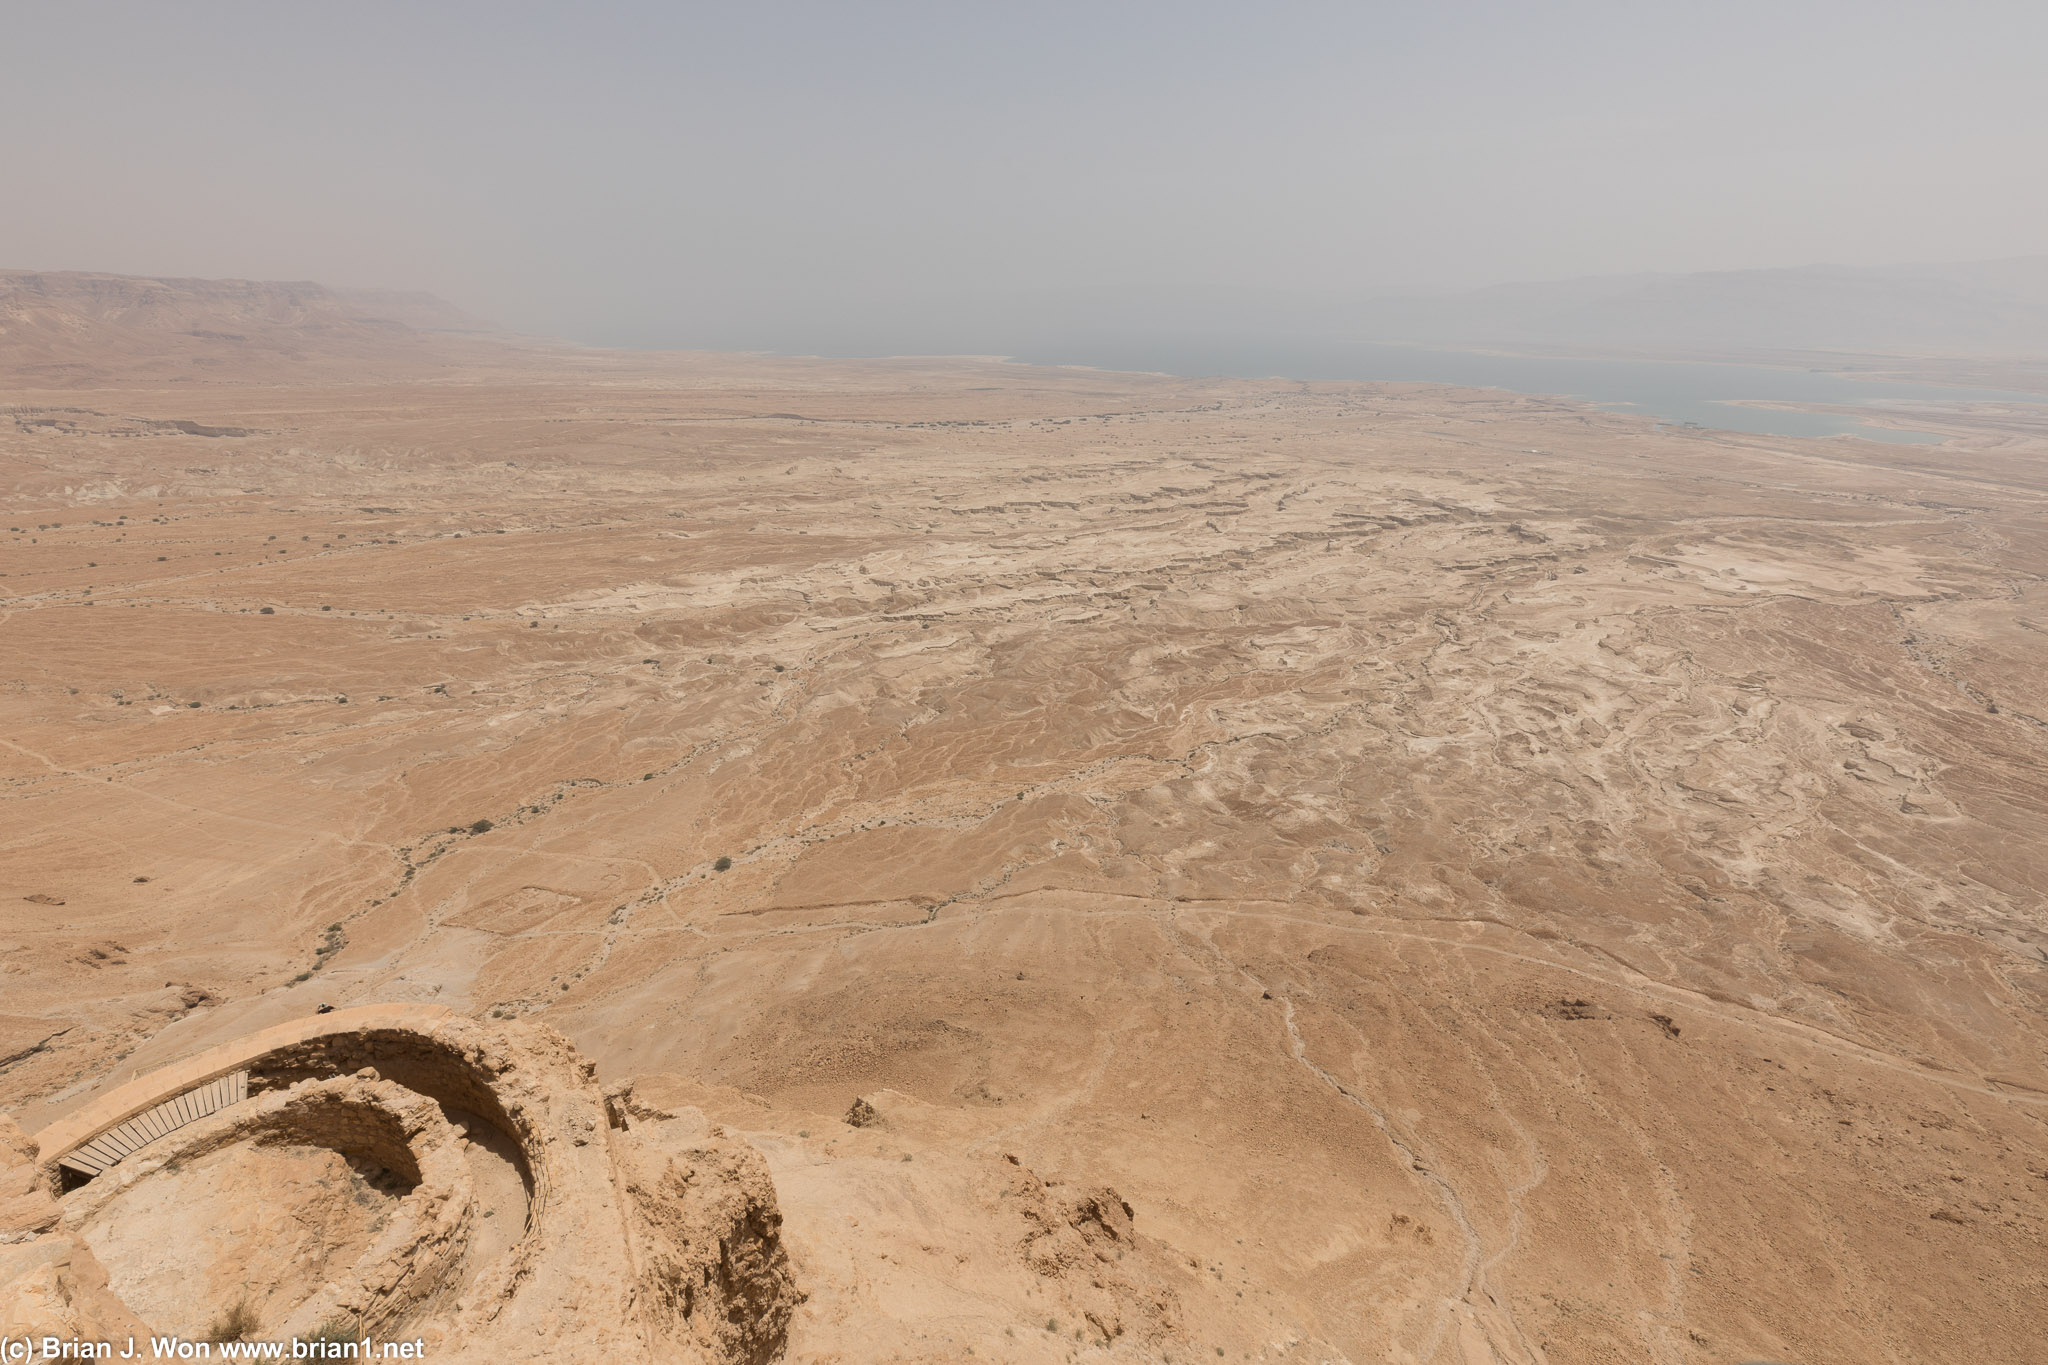 Lower cistern overlooking the Dead Sea.